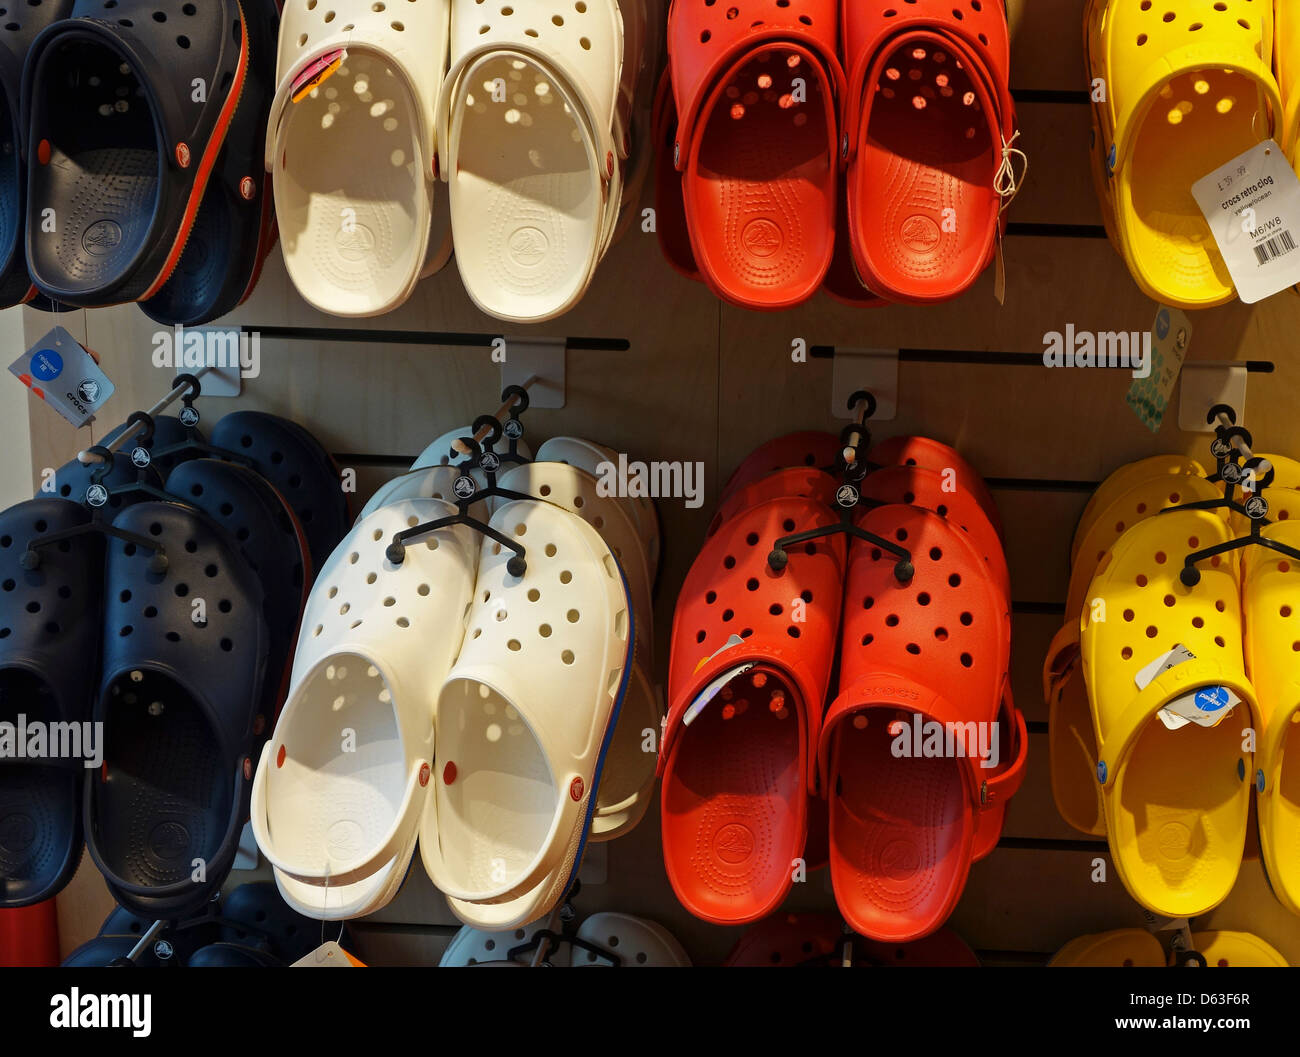 Crocs shoes in a Crocs shop Stock Photo 